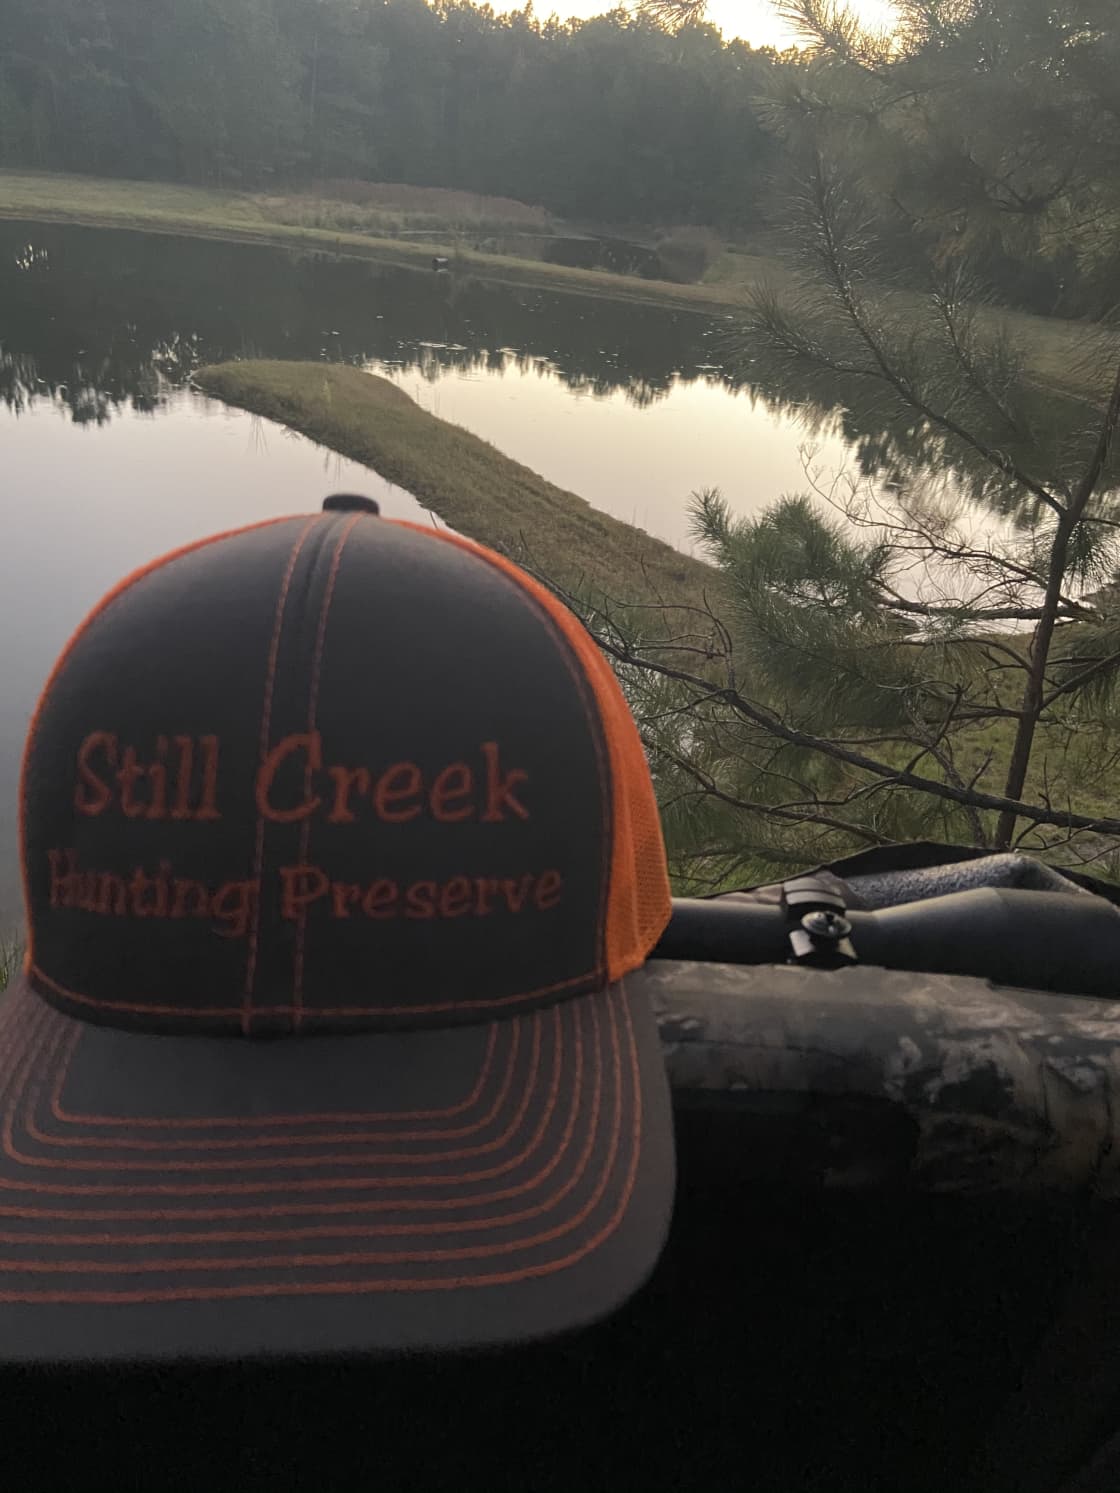 Still Creek preserve